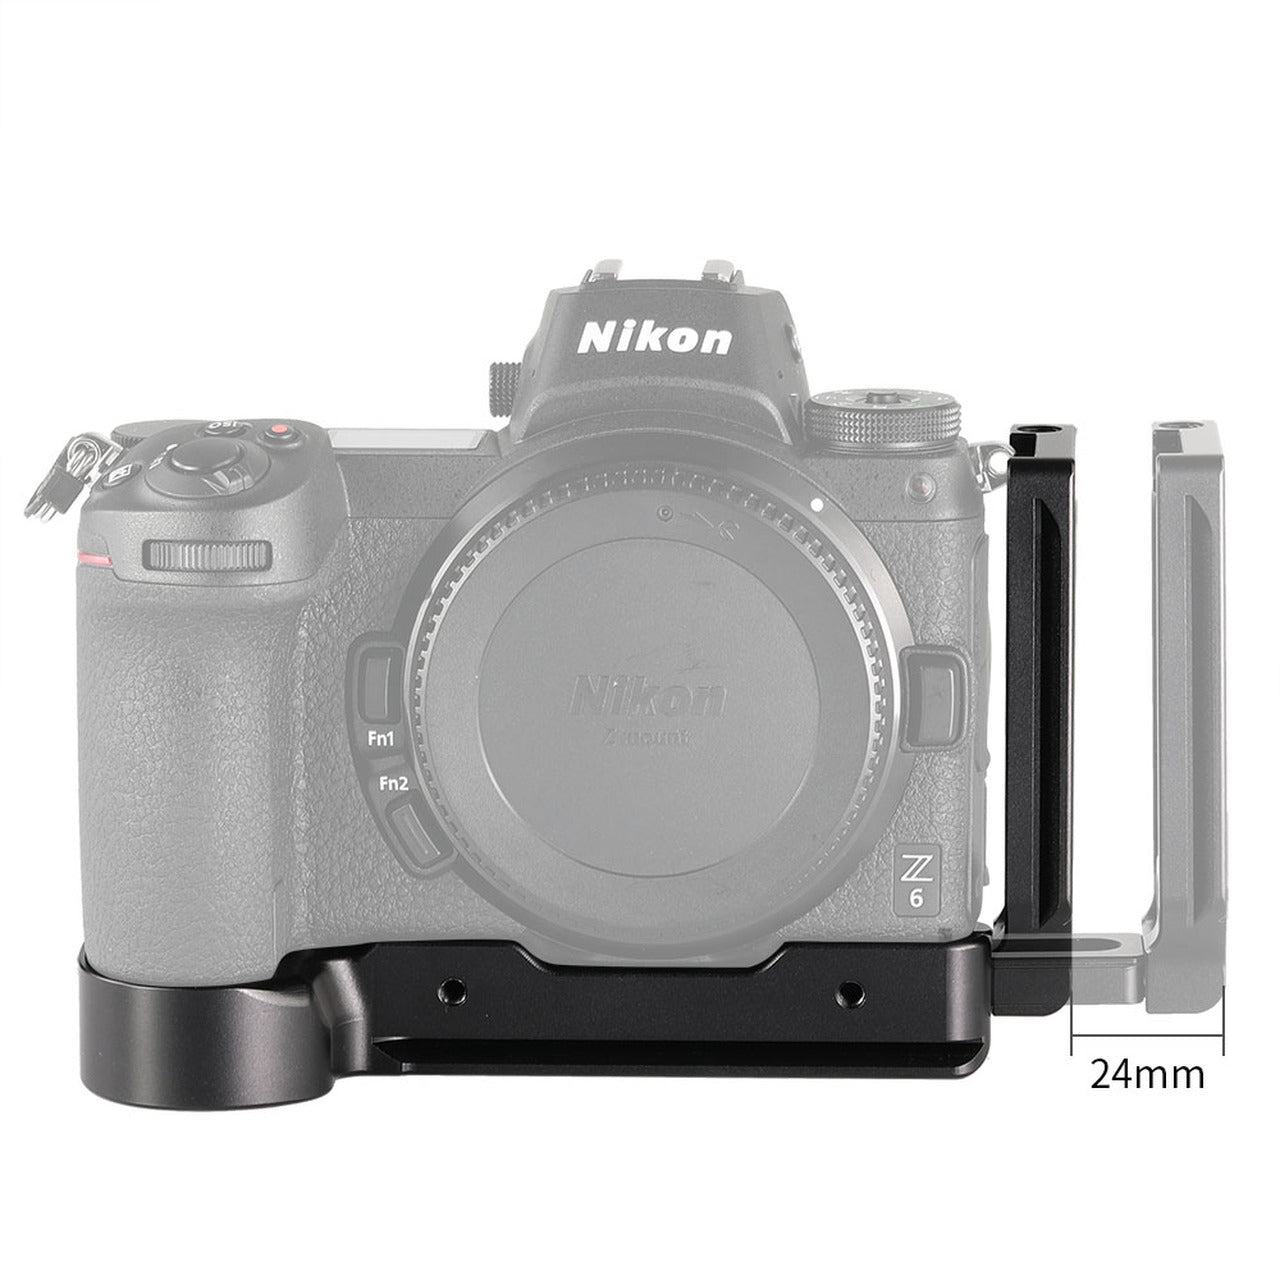 SmallRig Camera L-Bracket for Nikon Z5 / Z6 / Z7 / Z6 II / Z7 II with Allen Wrench Slidable Side Plate Anti-Twist Flanges | Model - APL2258